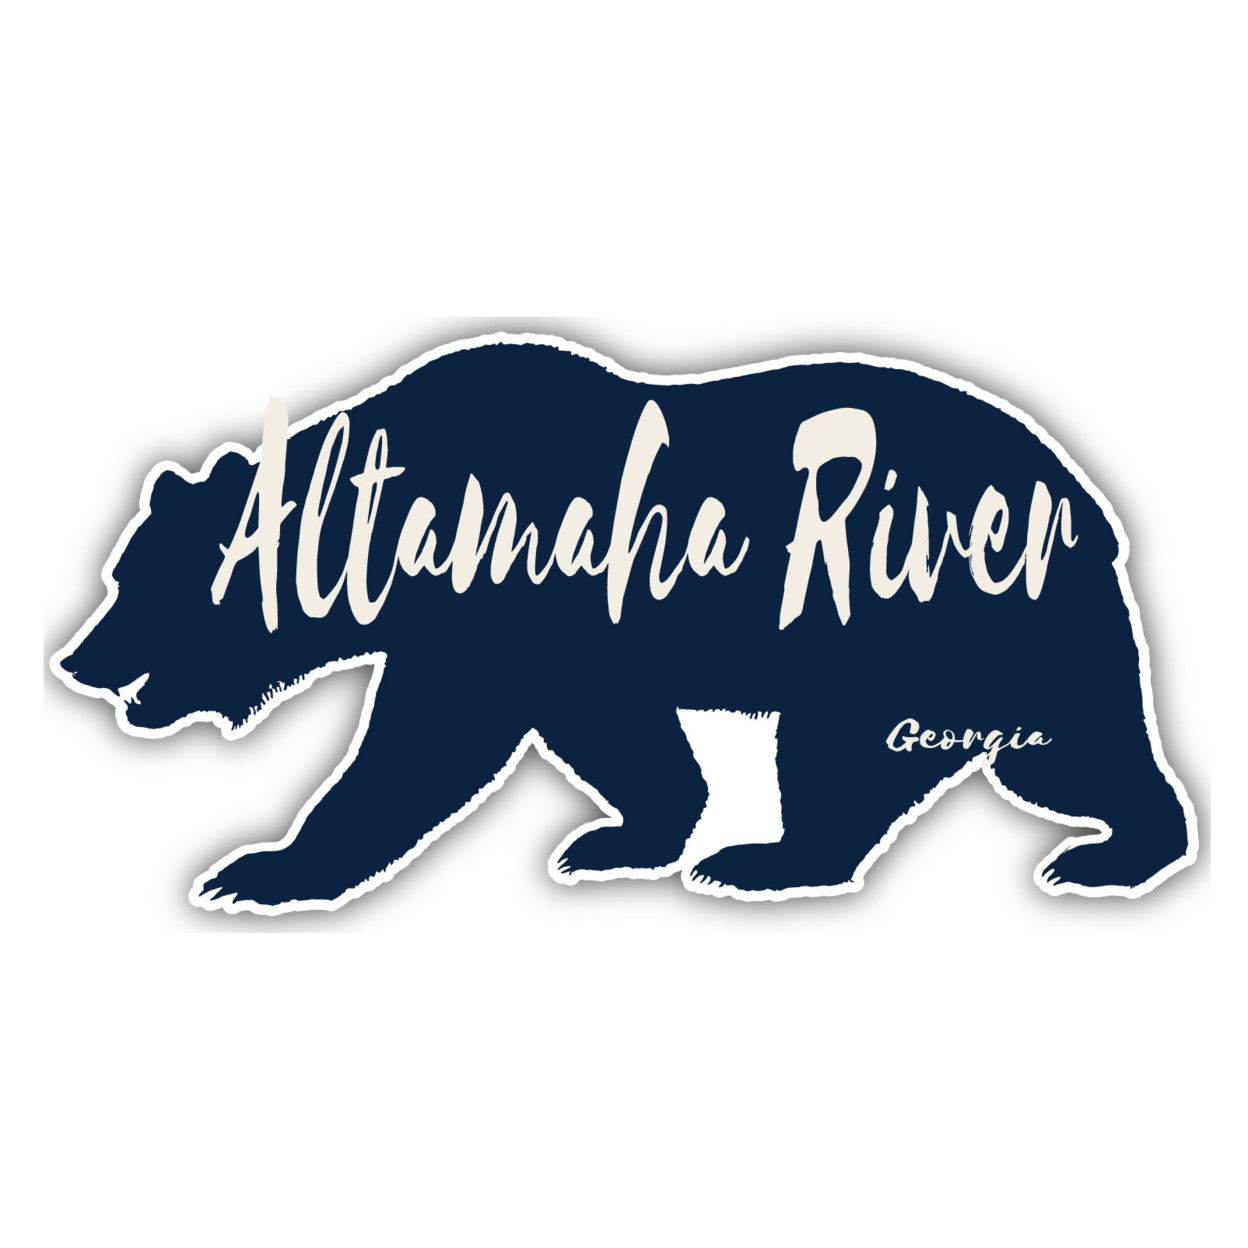 Altamaha River Georgia Souvenir Decorative Stickers (Choose Theme And Size) - 4-Pack, 4-Inch, Bear